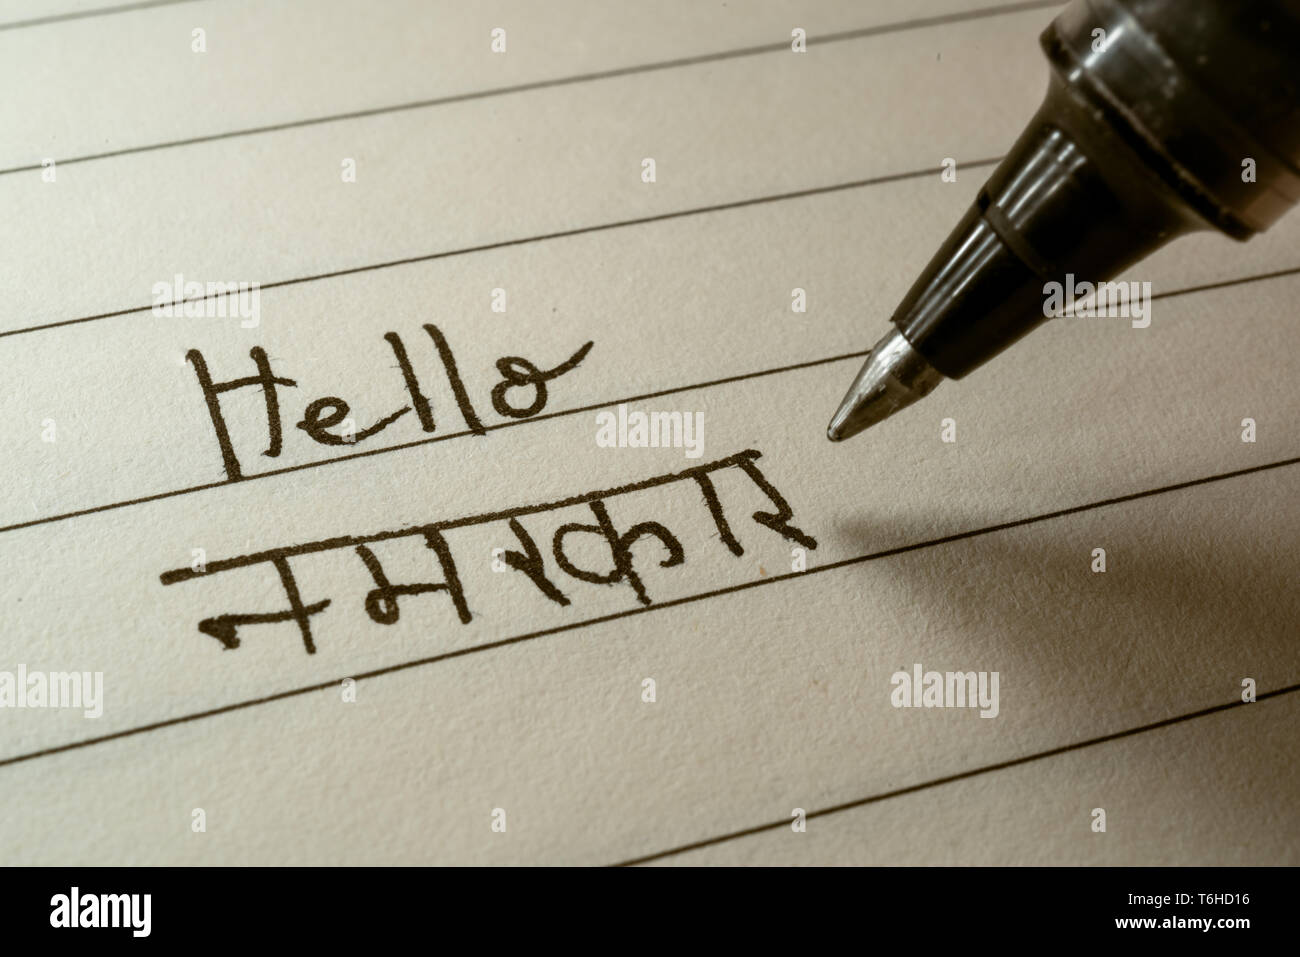 Beginner Hindi language learner writing Hello Namaste word in Indian Hindi alphabet on a notebook close-up shot Stock Photo